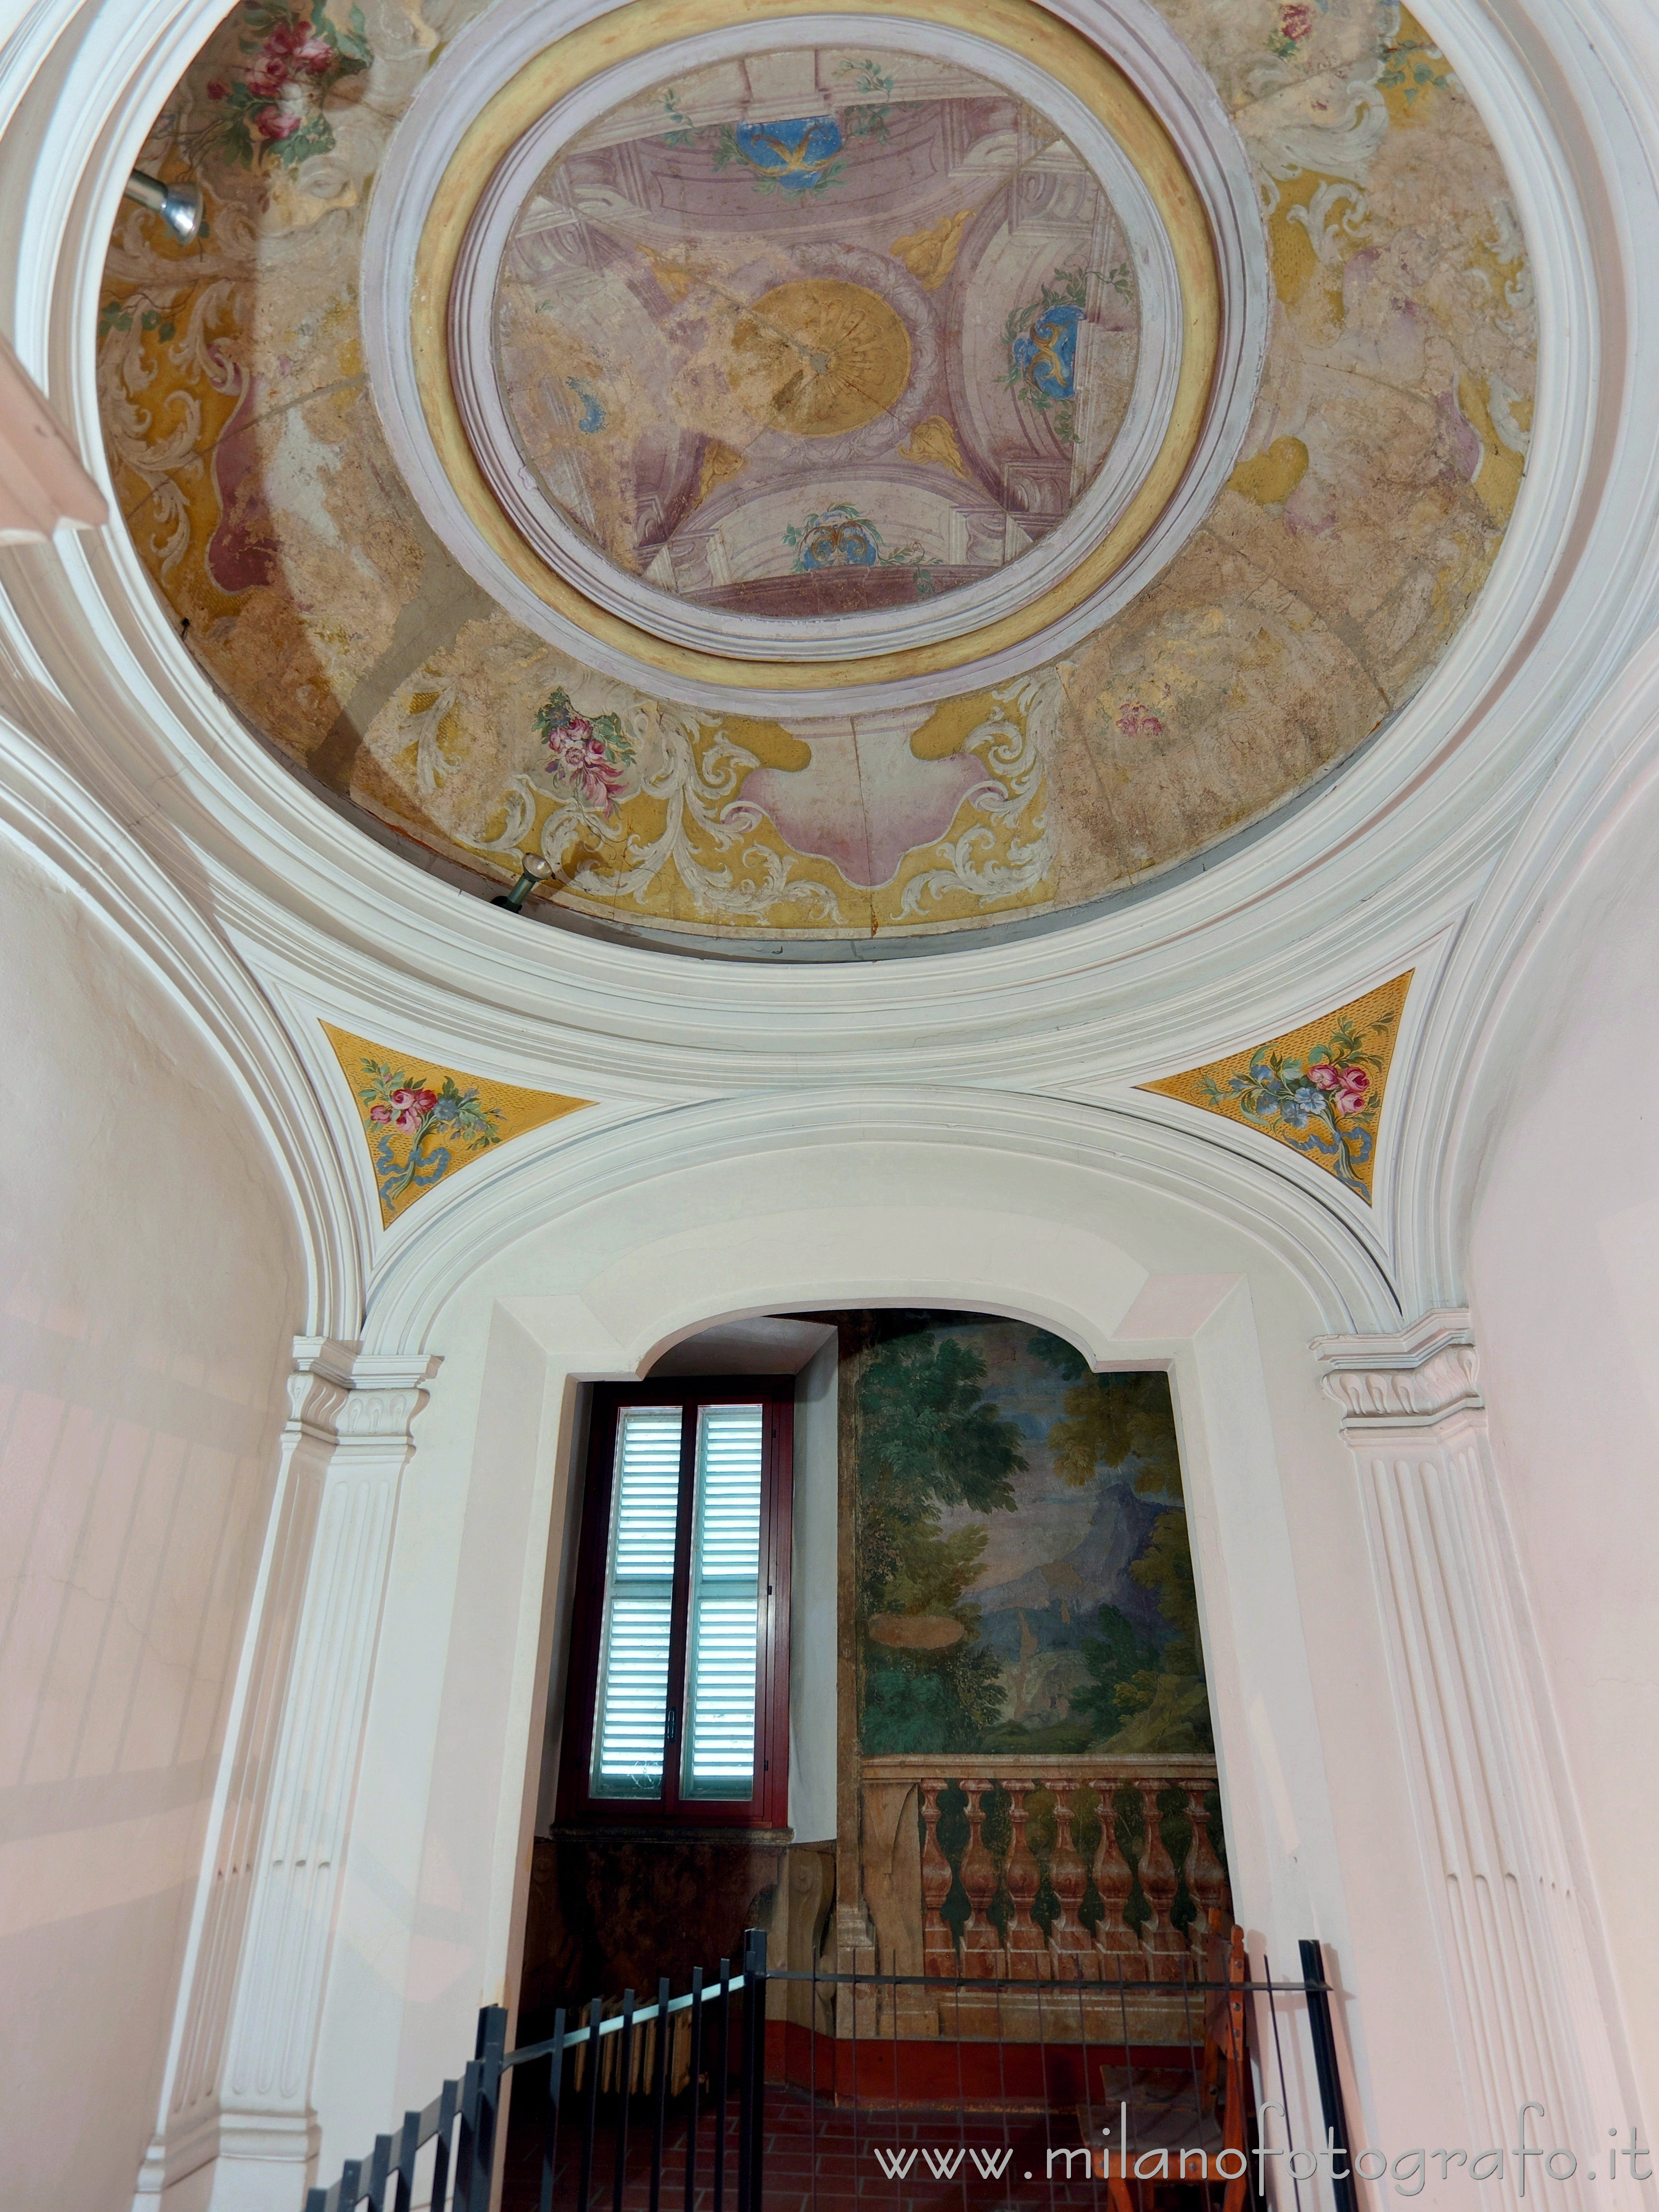 Sesto San Giovanni (Milan, Italy): Ceiling of the staircase of Villa Visconti - Sesto San Giovanni (Milan, Italy)